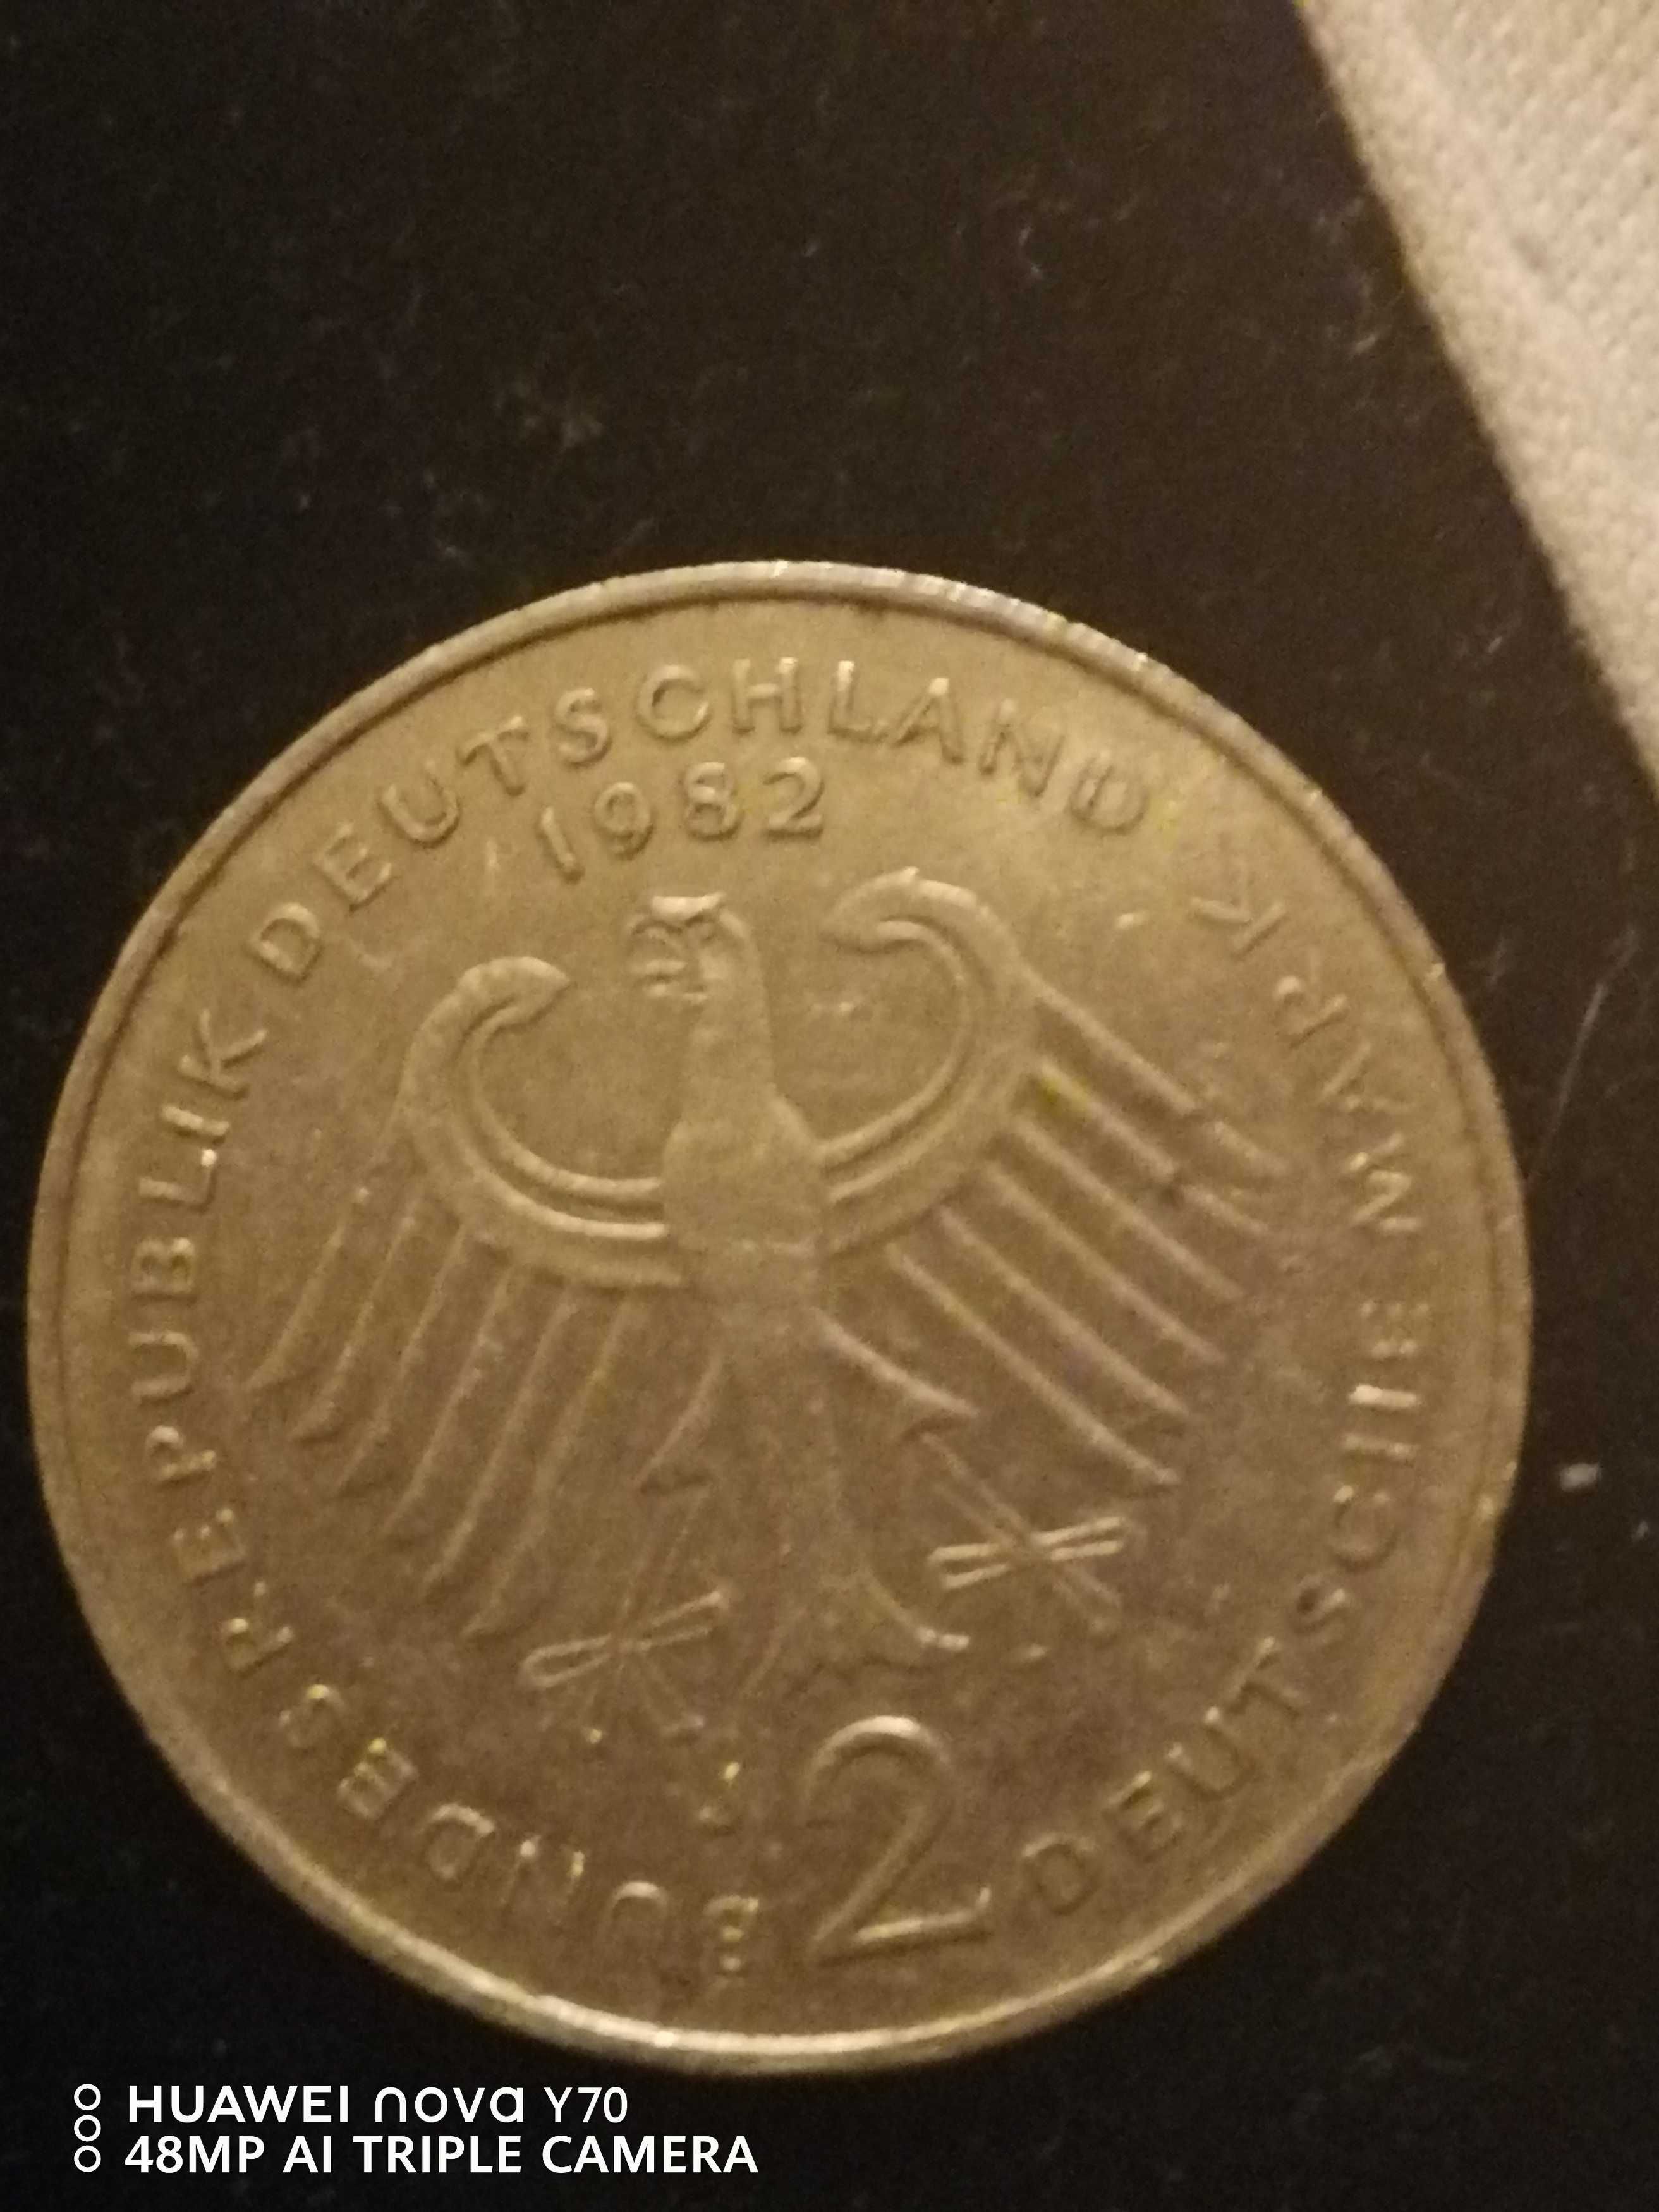 Moneta z roku 1982